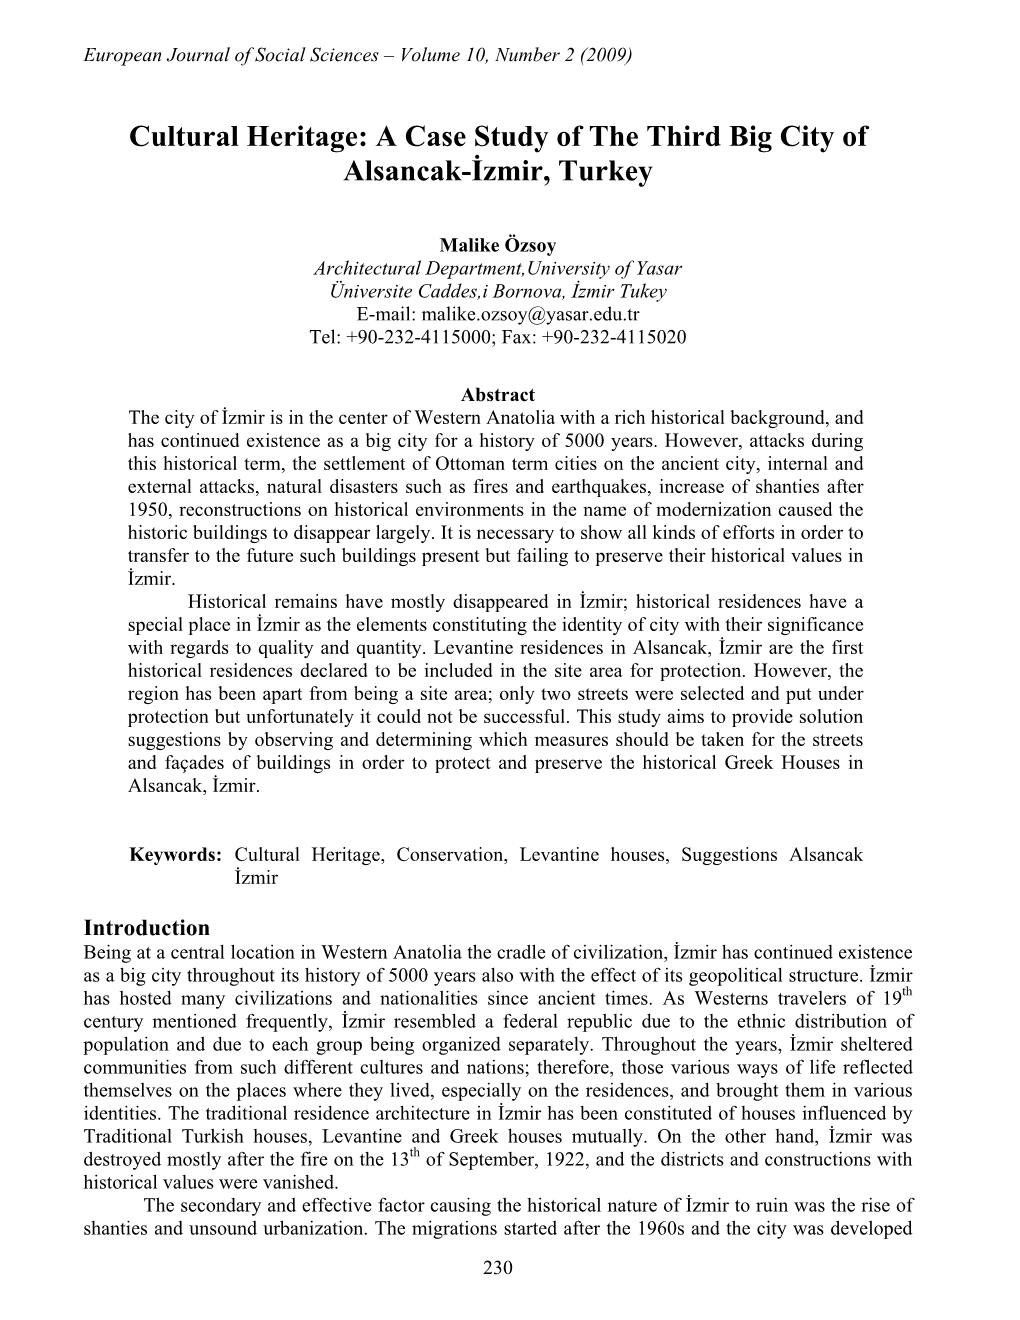 Cultural Heritage: a Case Study of the Third Big City of Alsancak-İzmir, Turkey